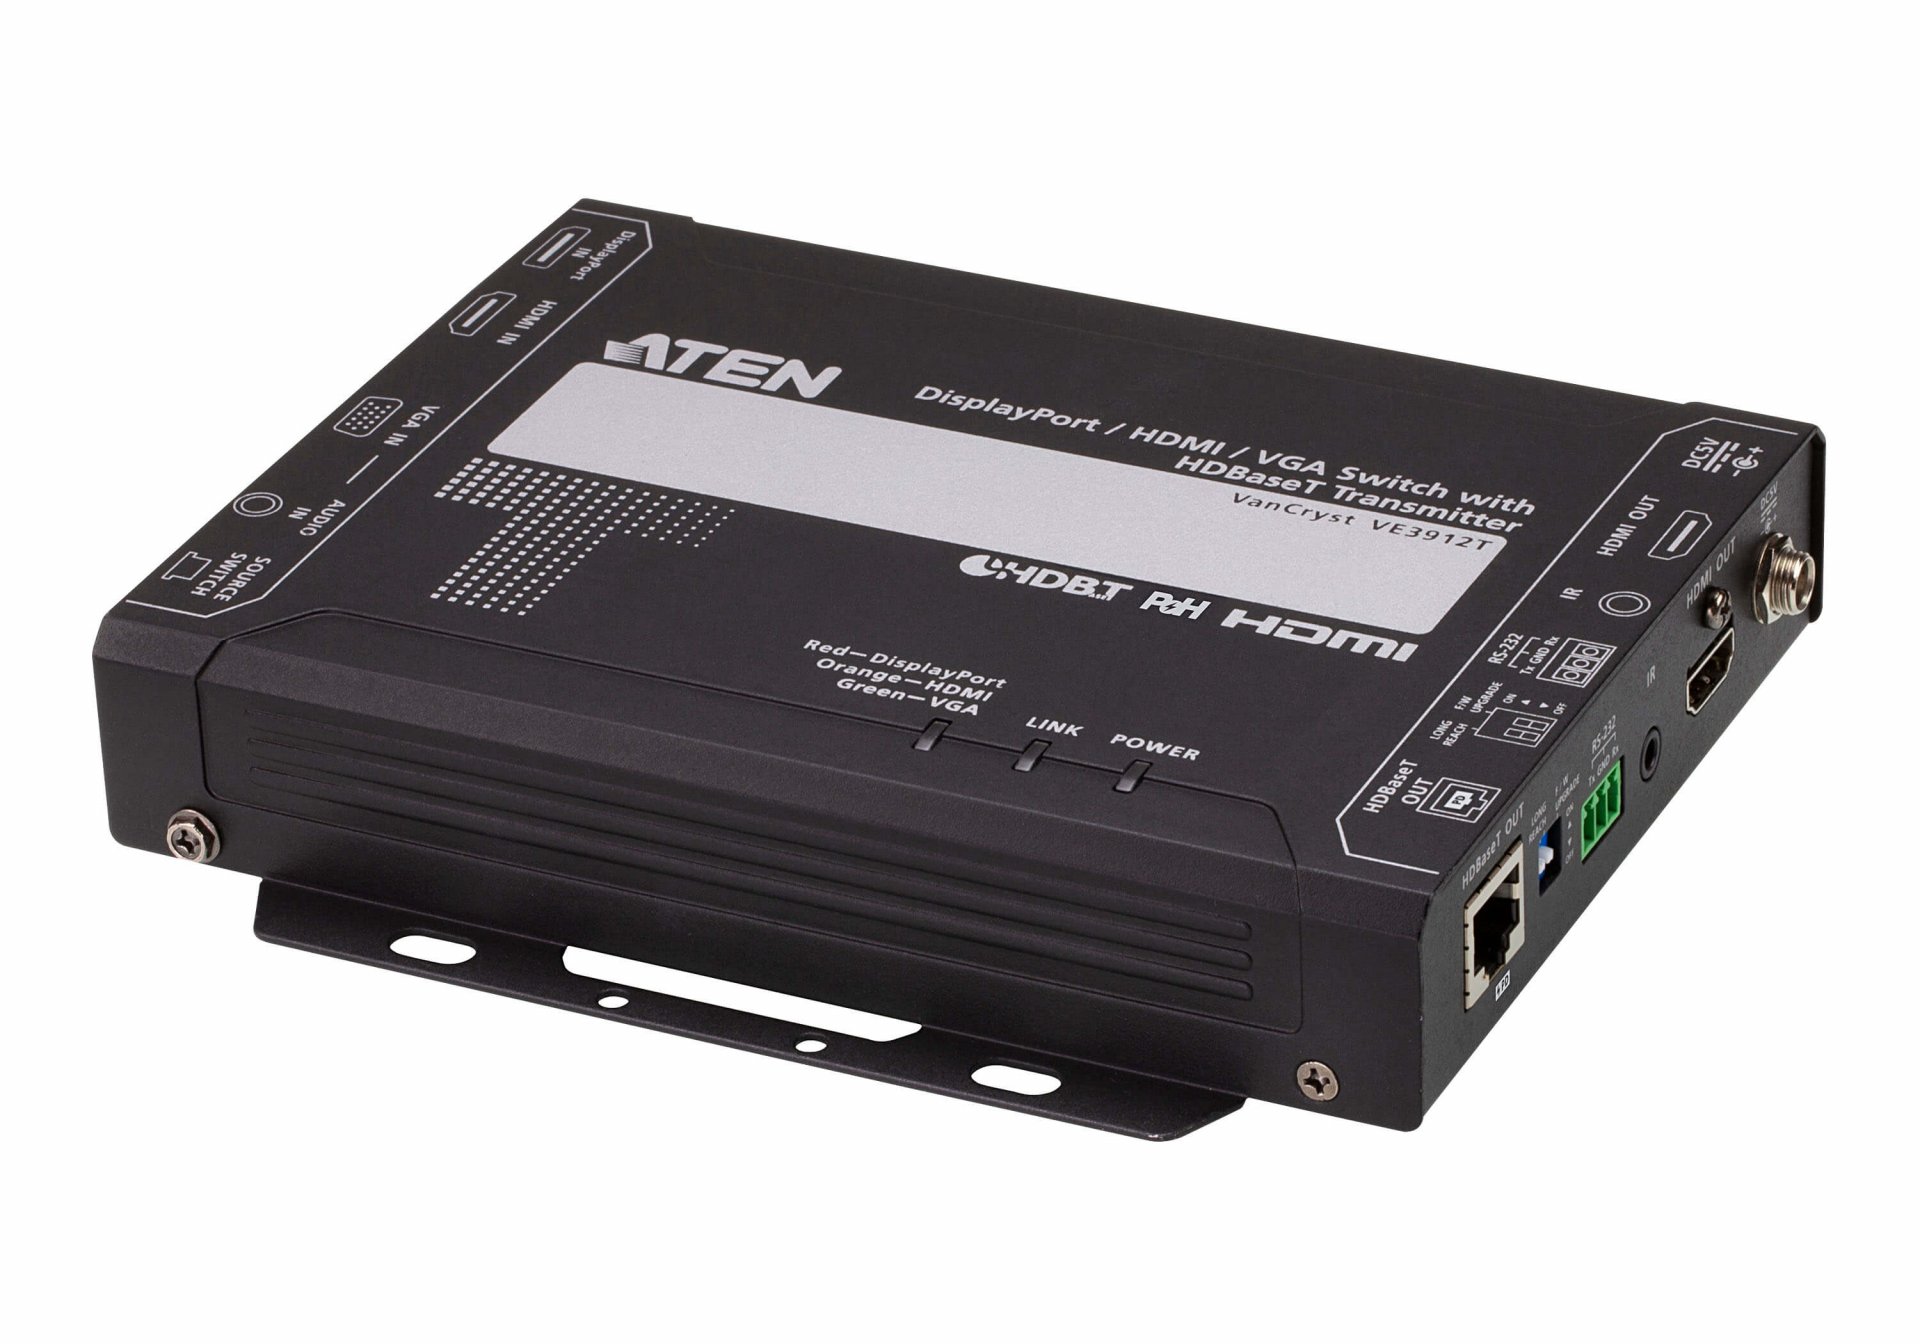 VE3912T : DisplayPort / HDMI / VGA Switch with HDBaseT Transmitter